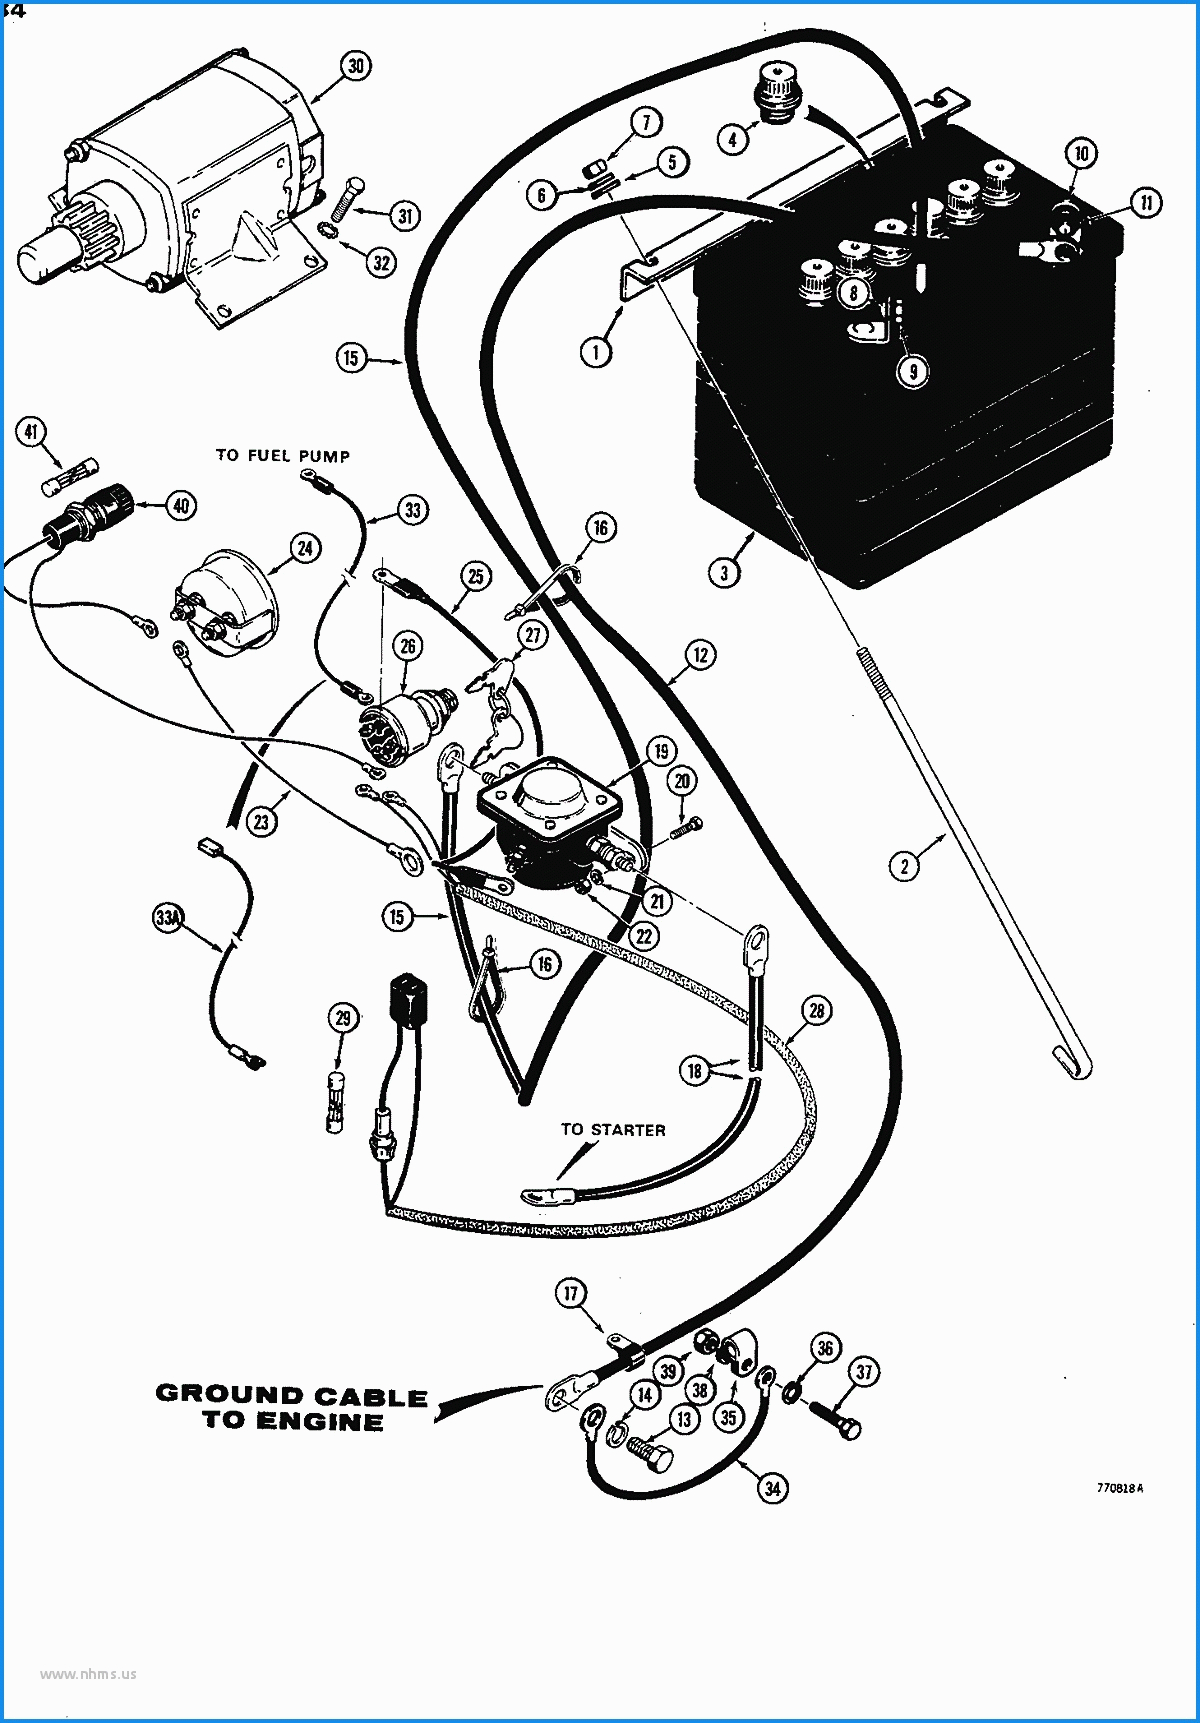 Solenoid Hydraulic Pump Motor Wiring Diagram | Manual E-Books - 12 Volt Hydraulic Pump Wiring Diagram